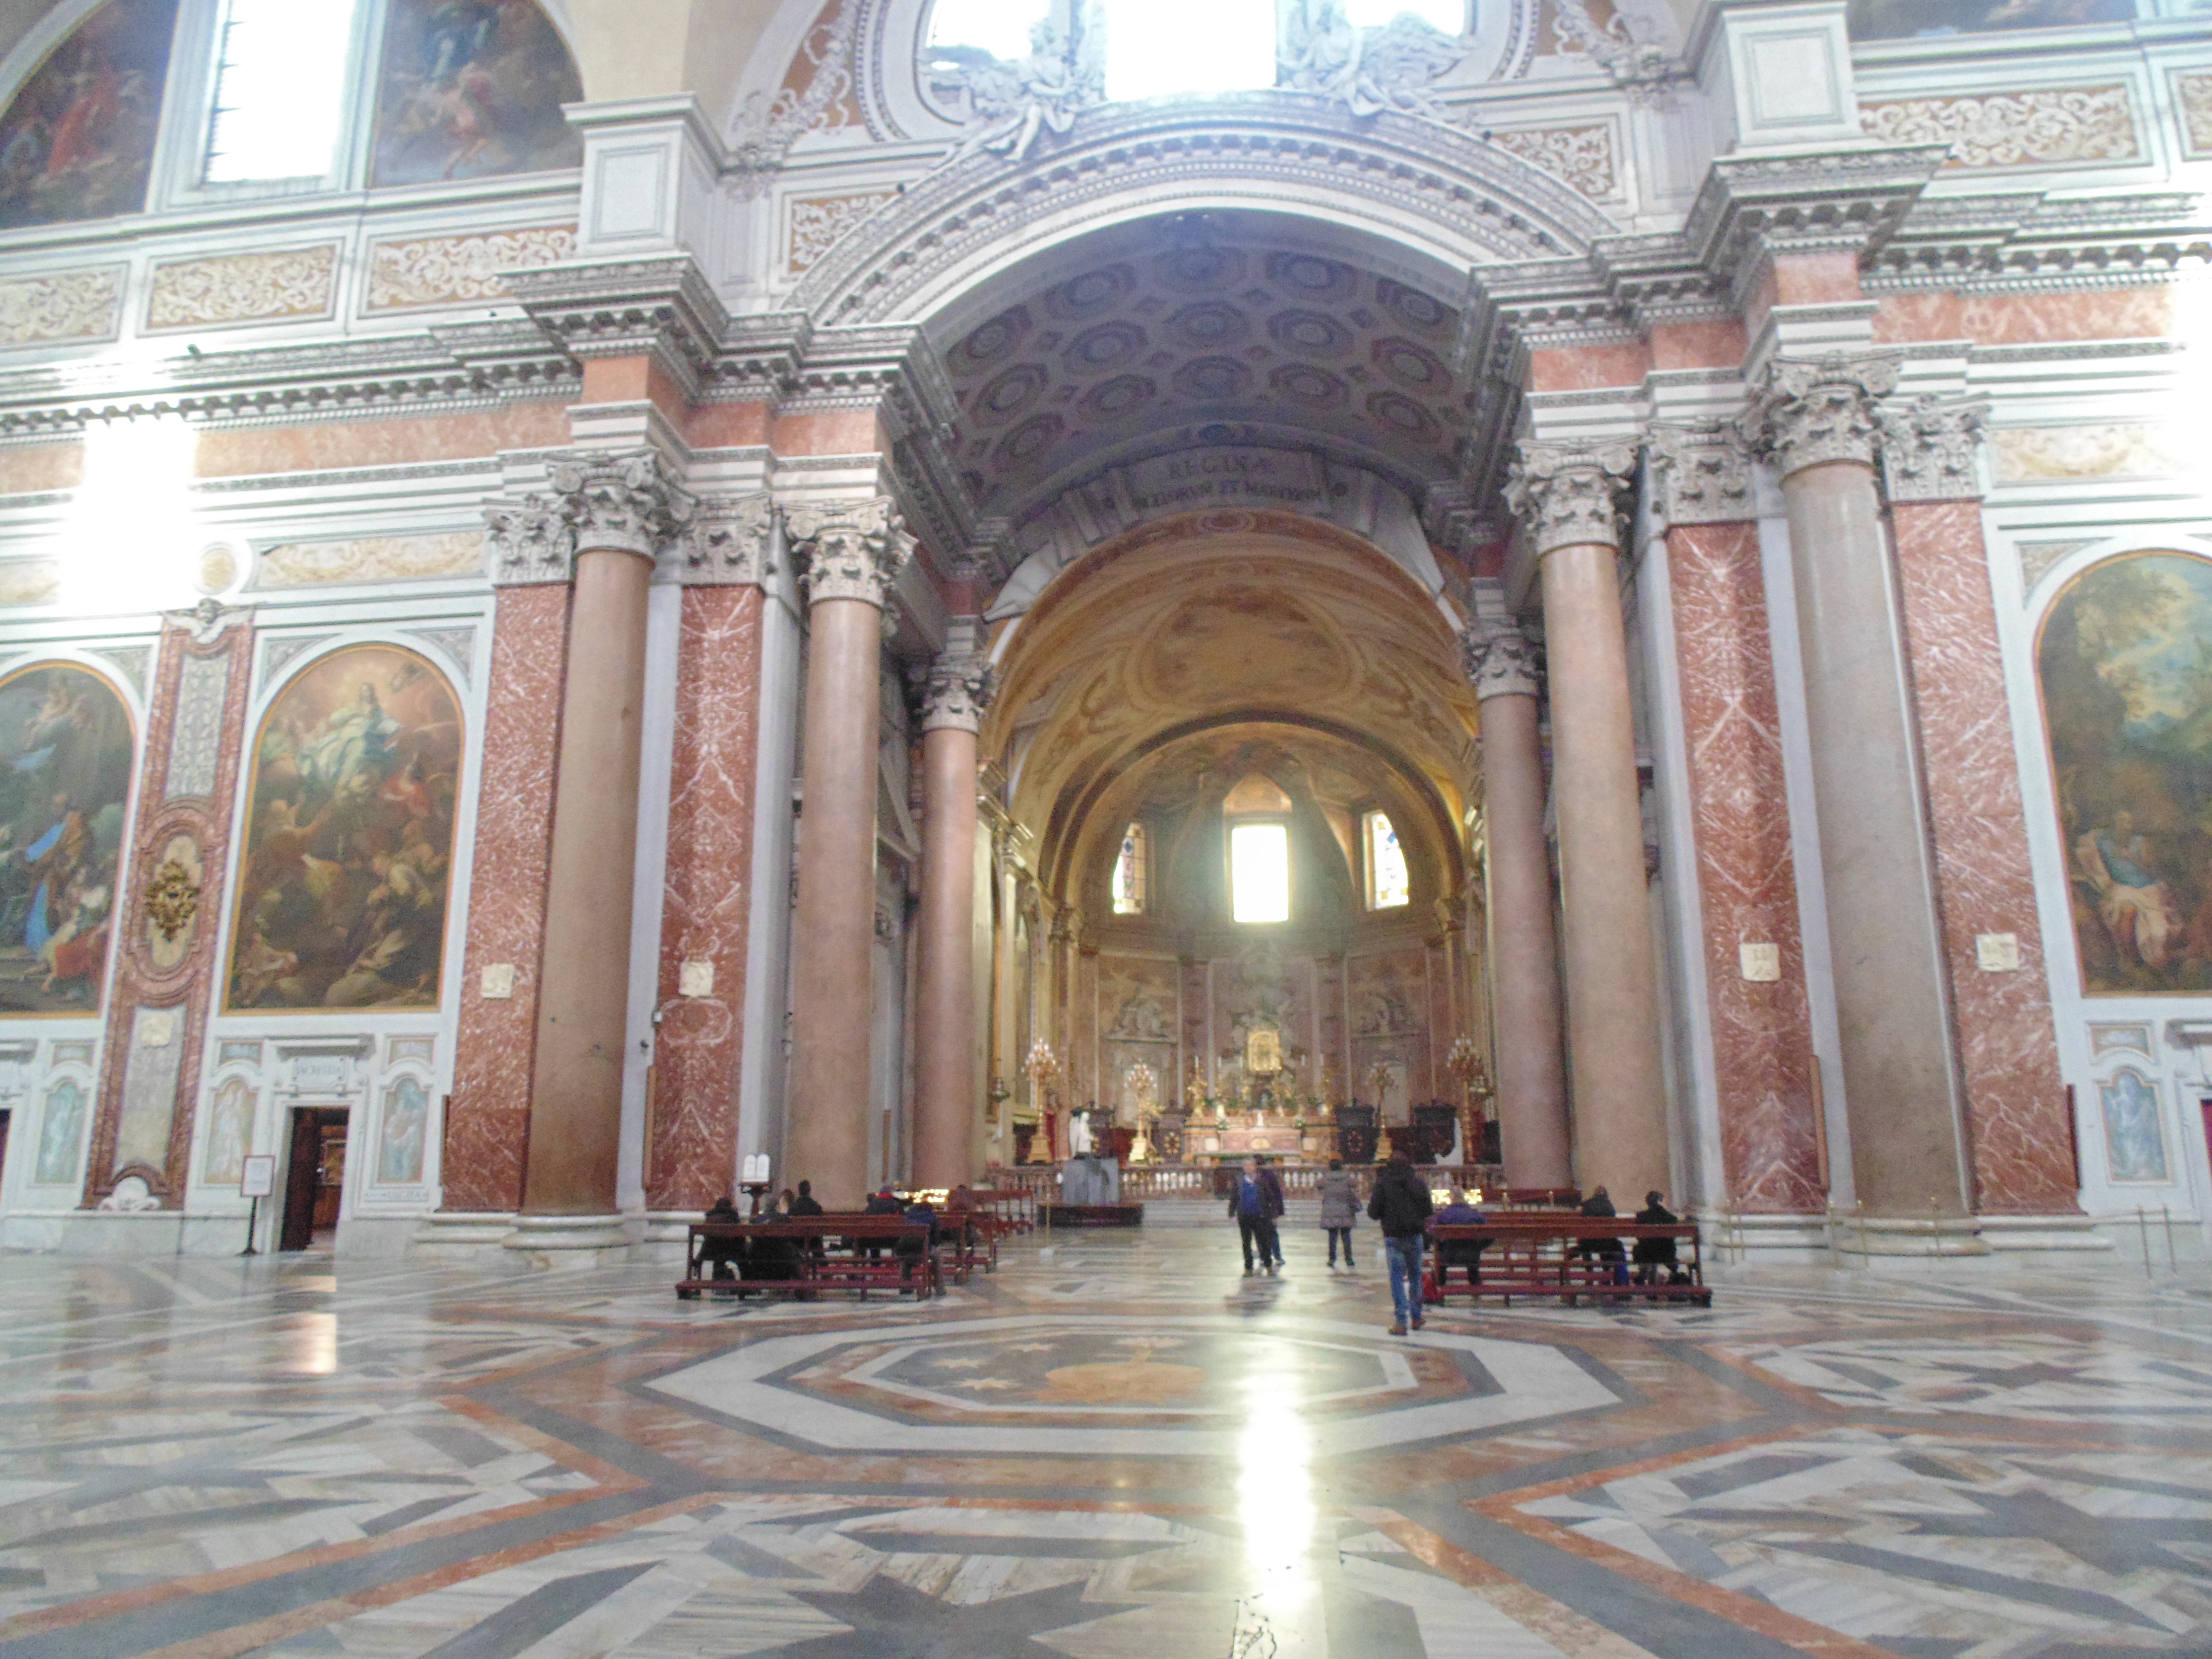 February 13, 2014 – Rome, continued | Our Grand European adventure